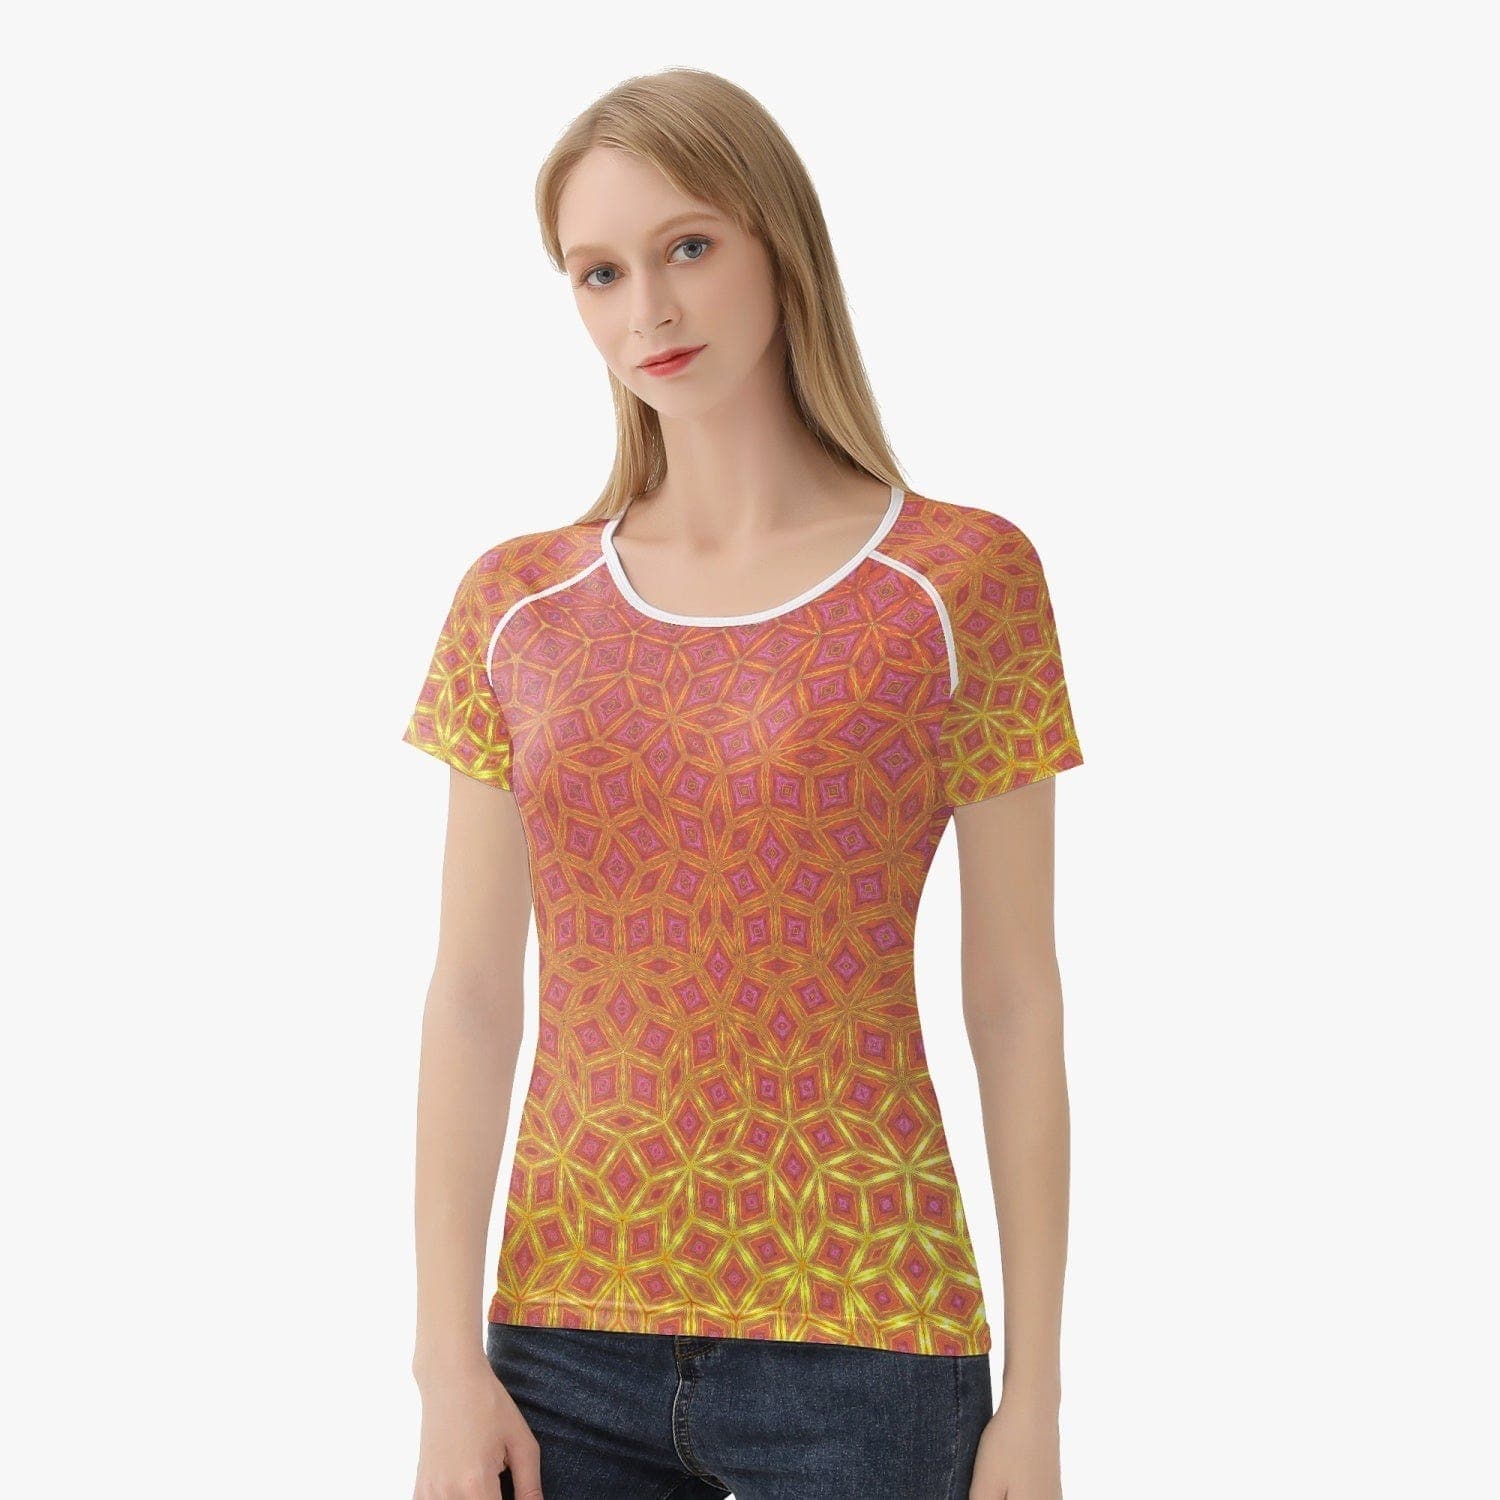 Winter dawn,  Handmade quick dry Sports/Yoga T-shirt for women, by Sensus Studio Design